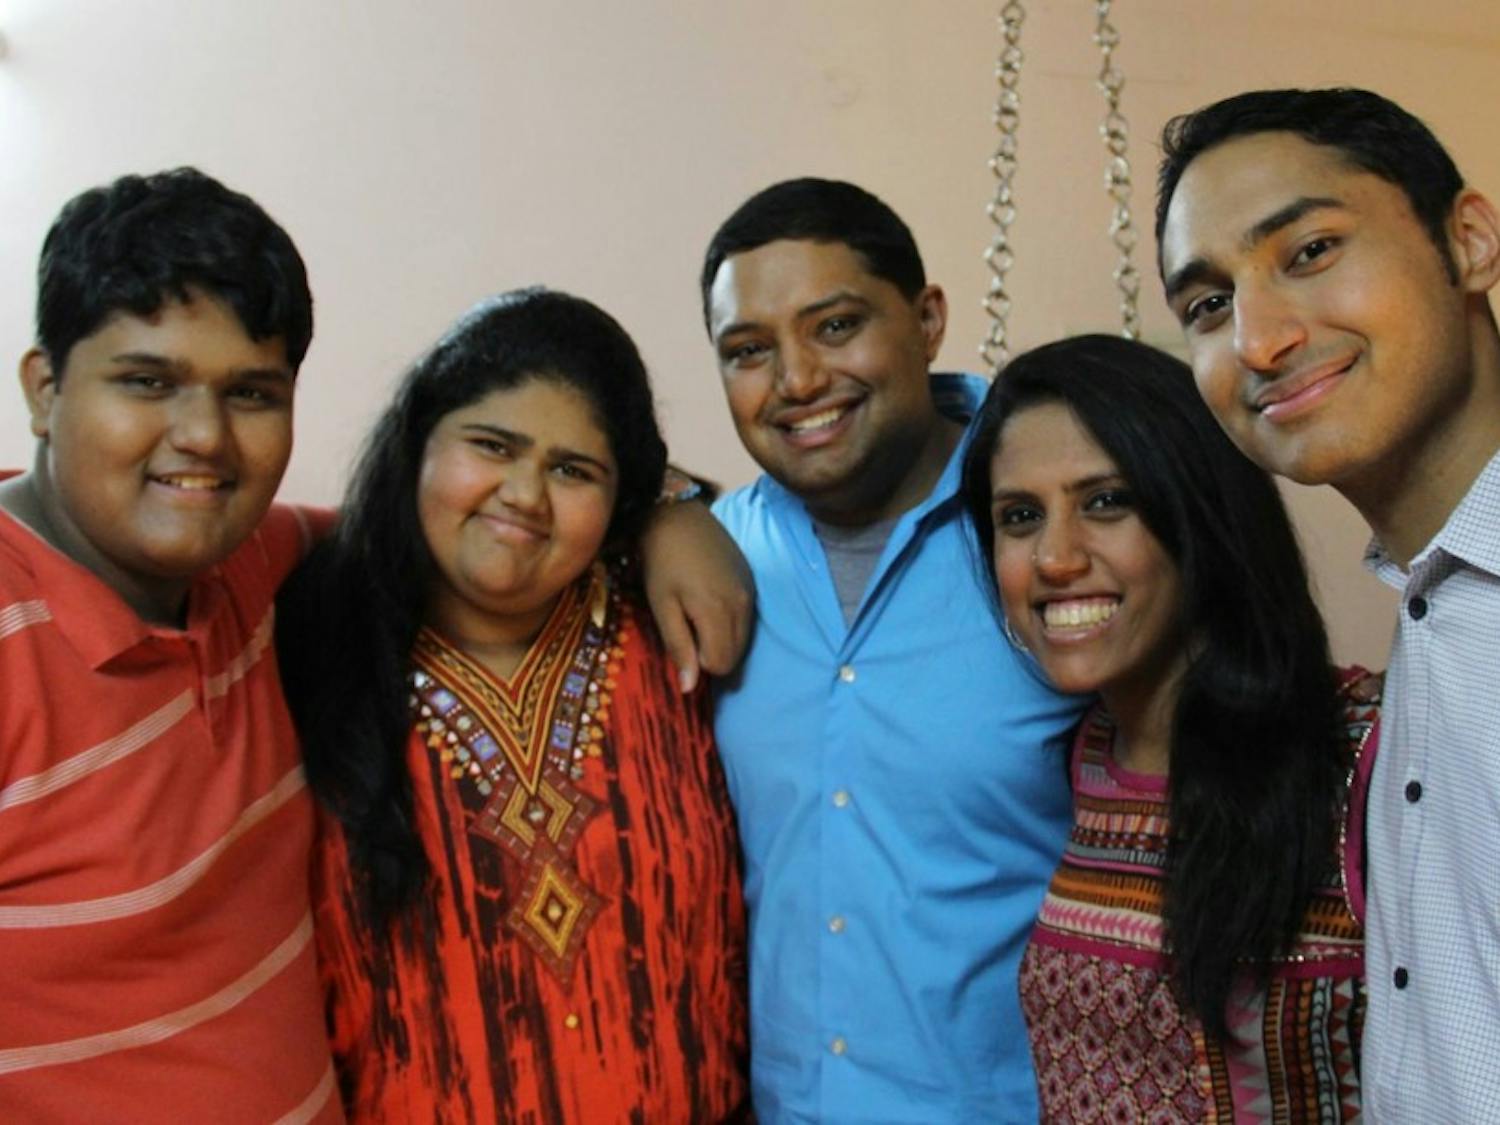 Cousins in India '14 (3).jpg